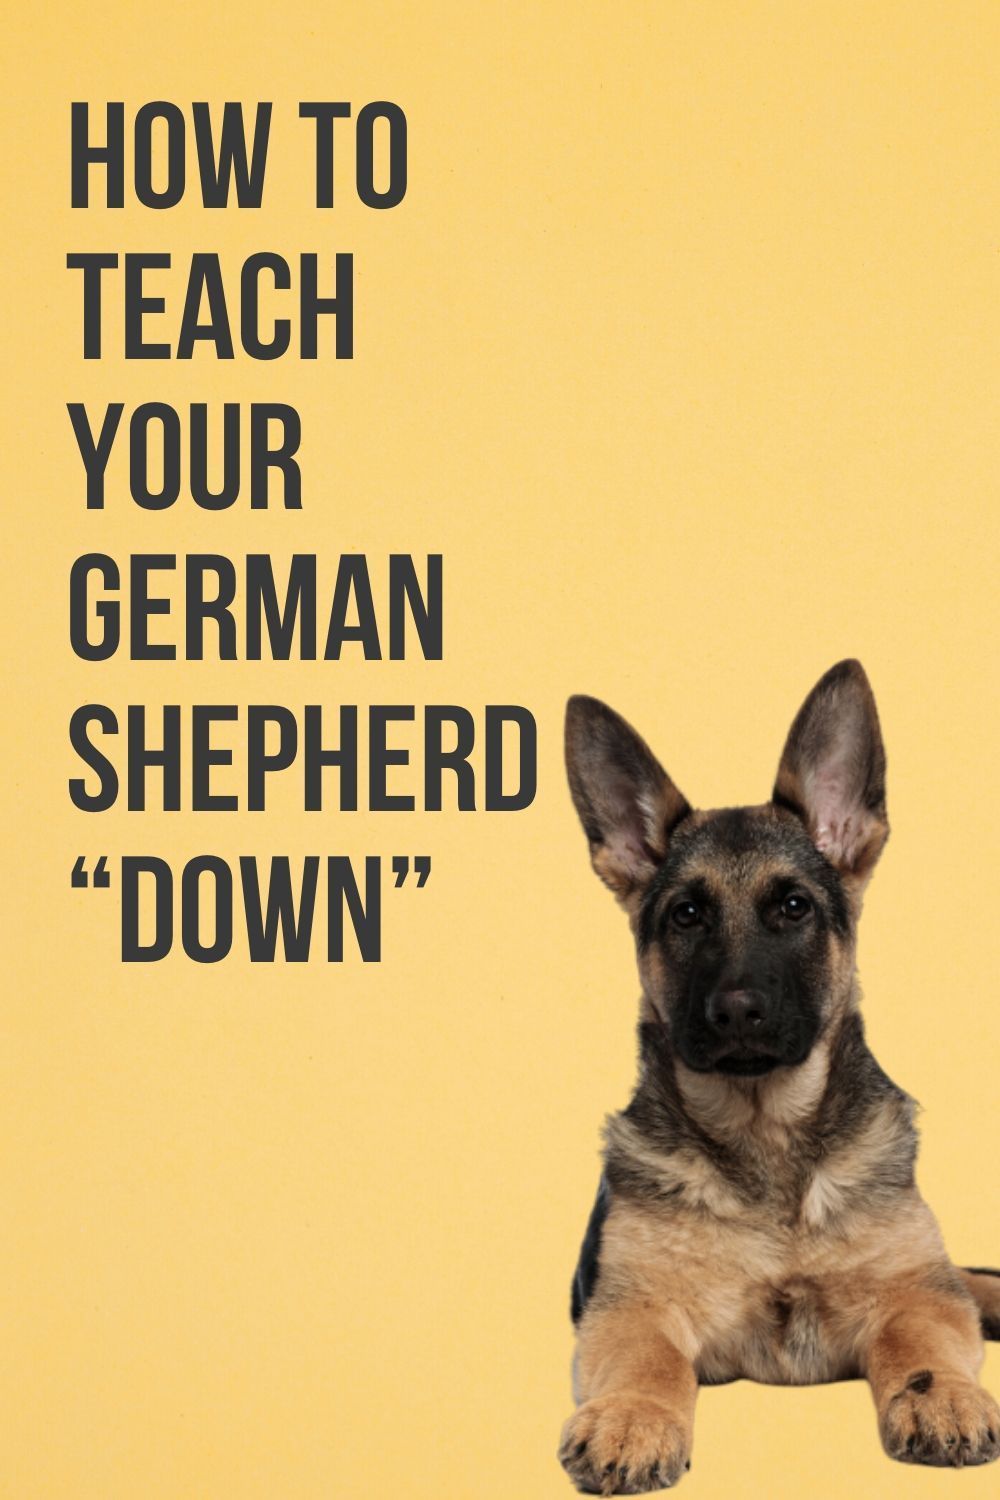 How To Train Your German Shepherd " Down"